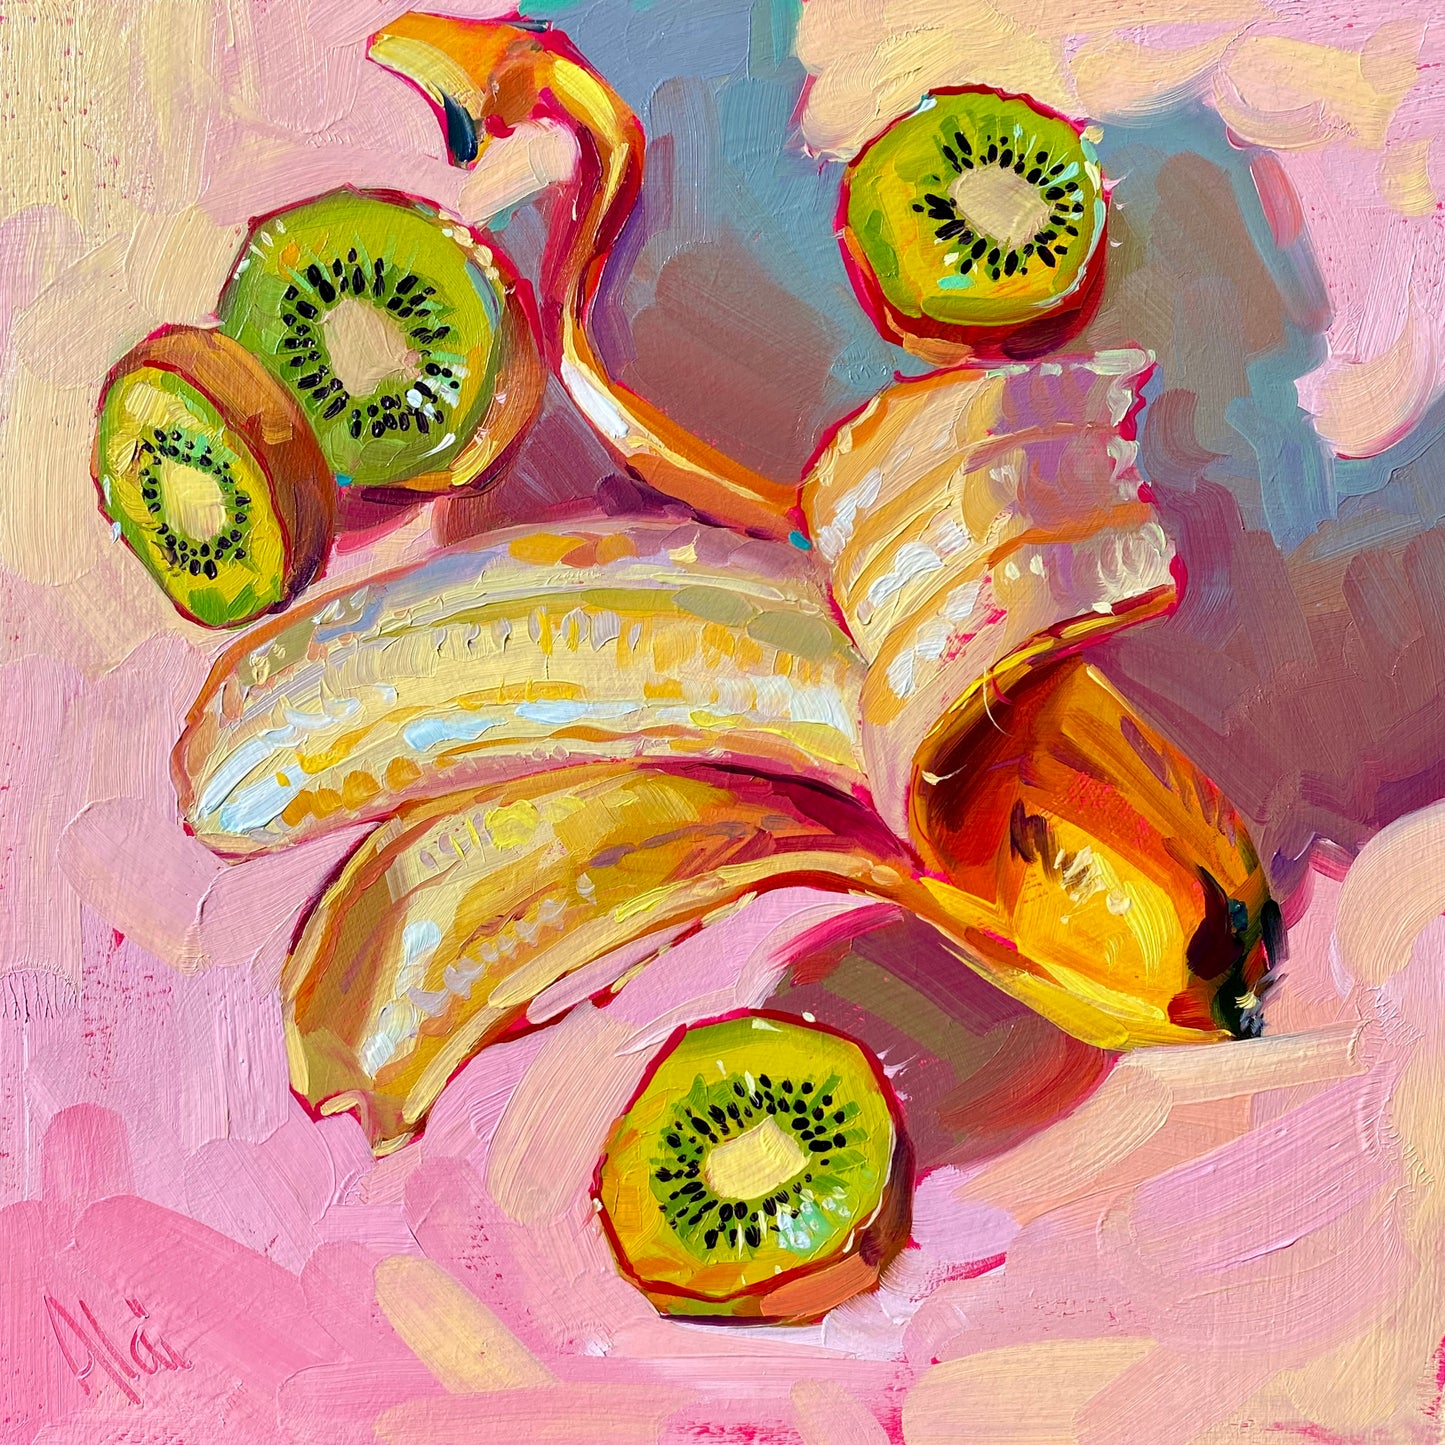 Banana and kiwis - Original Oil Painting